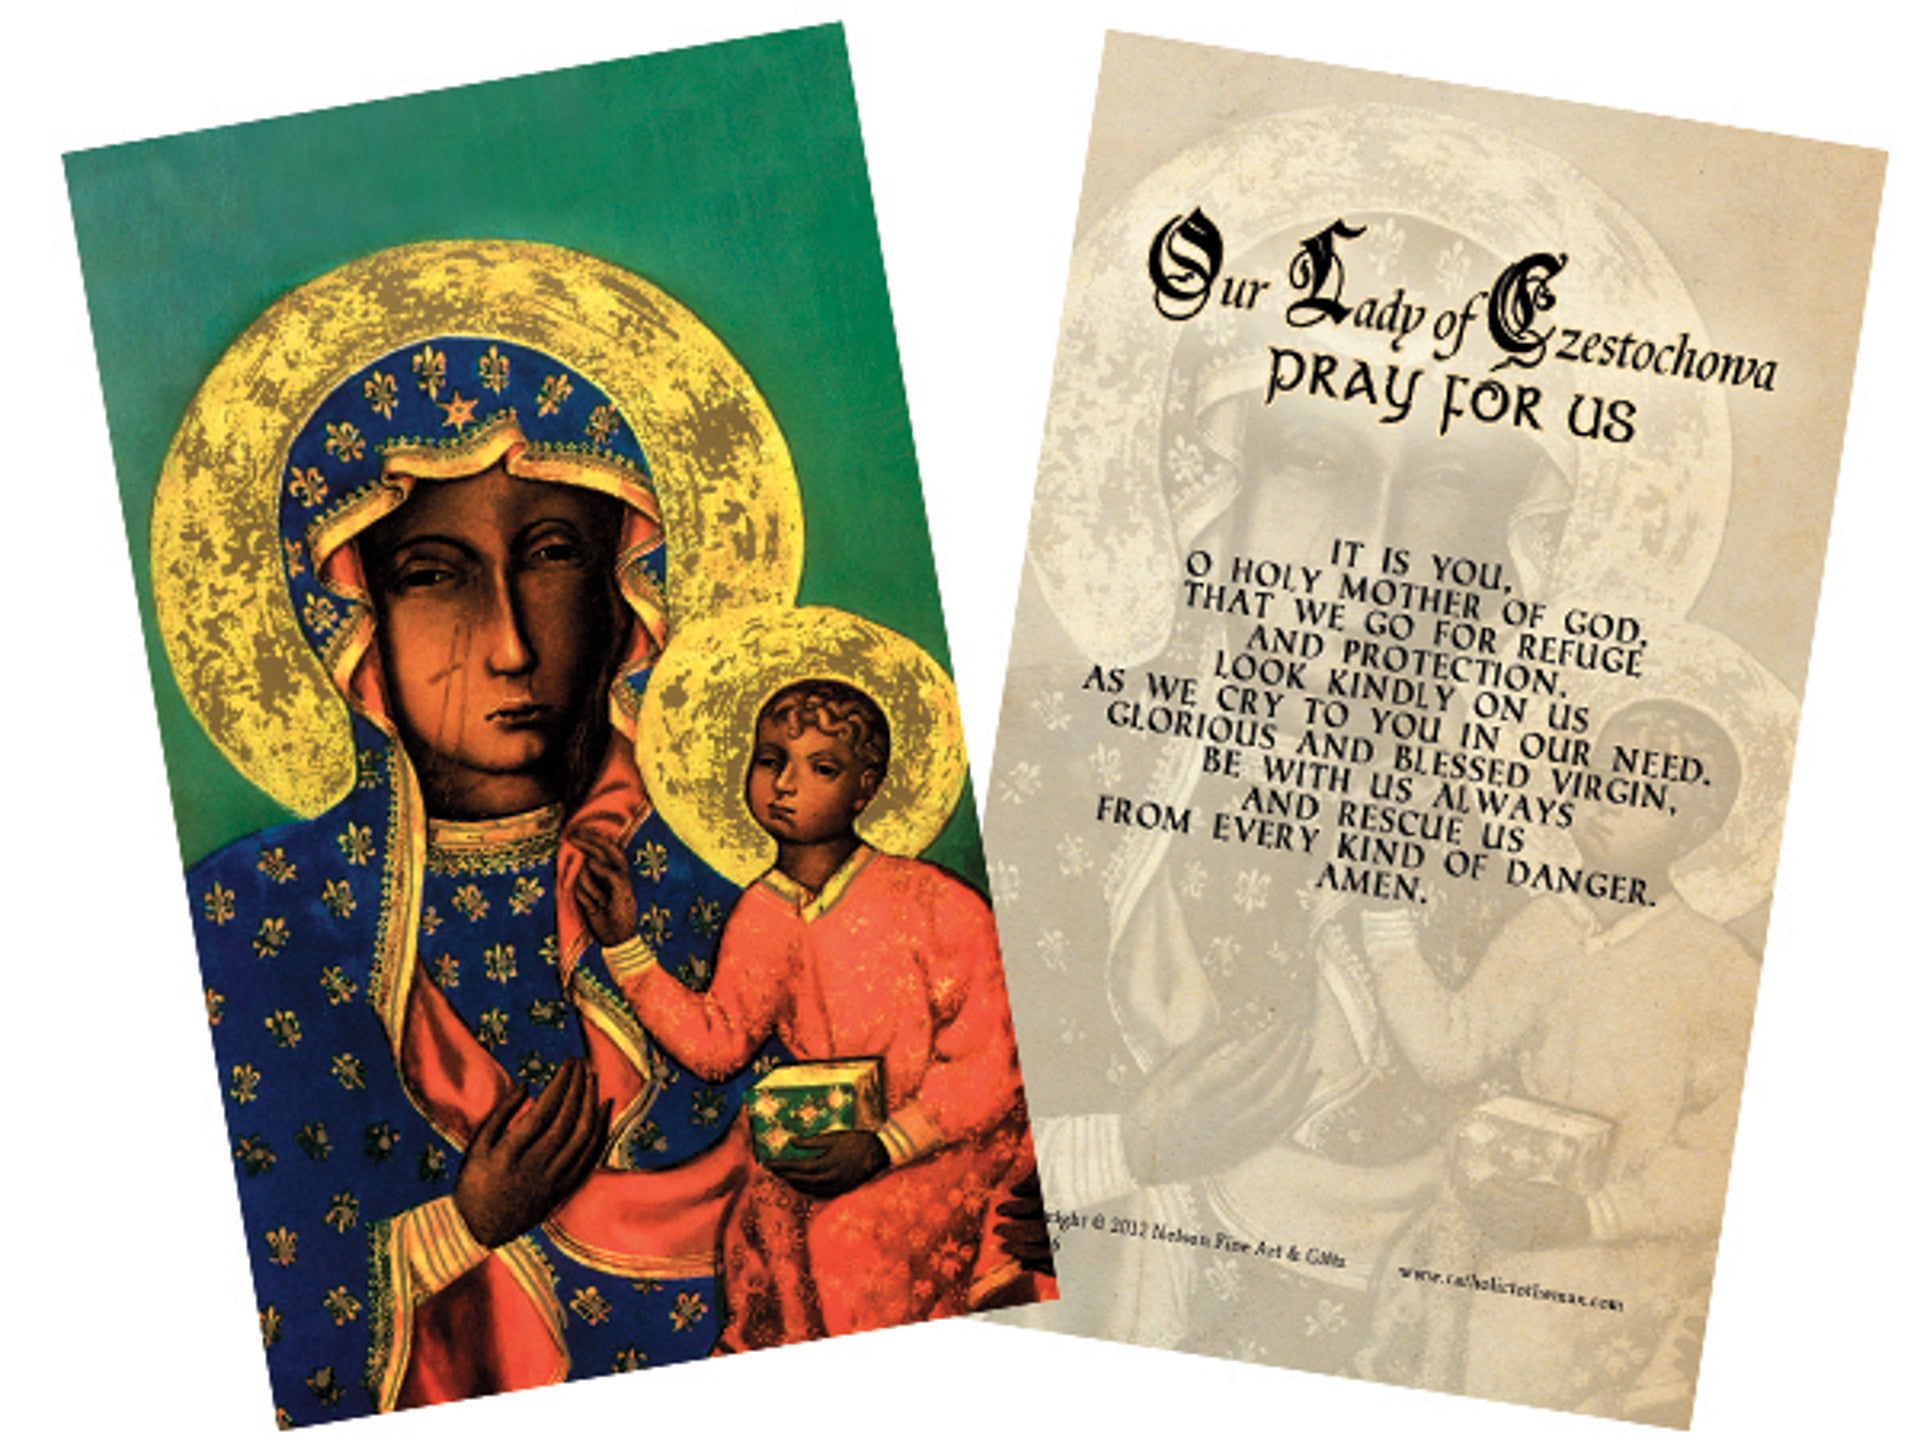 Our Lady of Czestochowa Holy Card